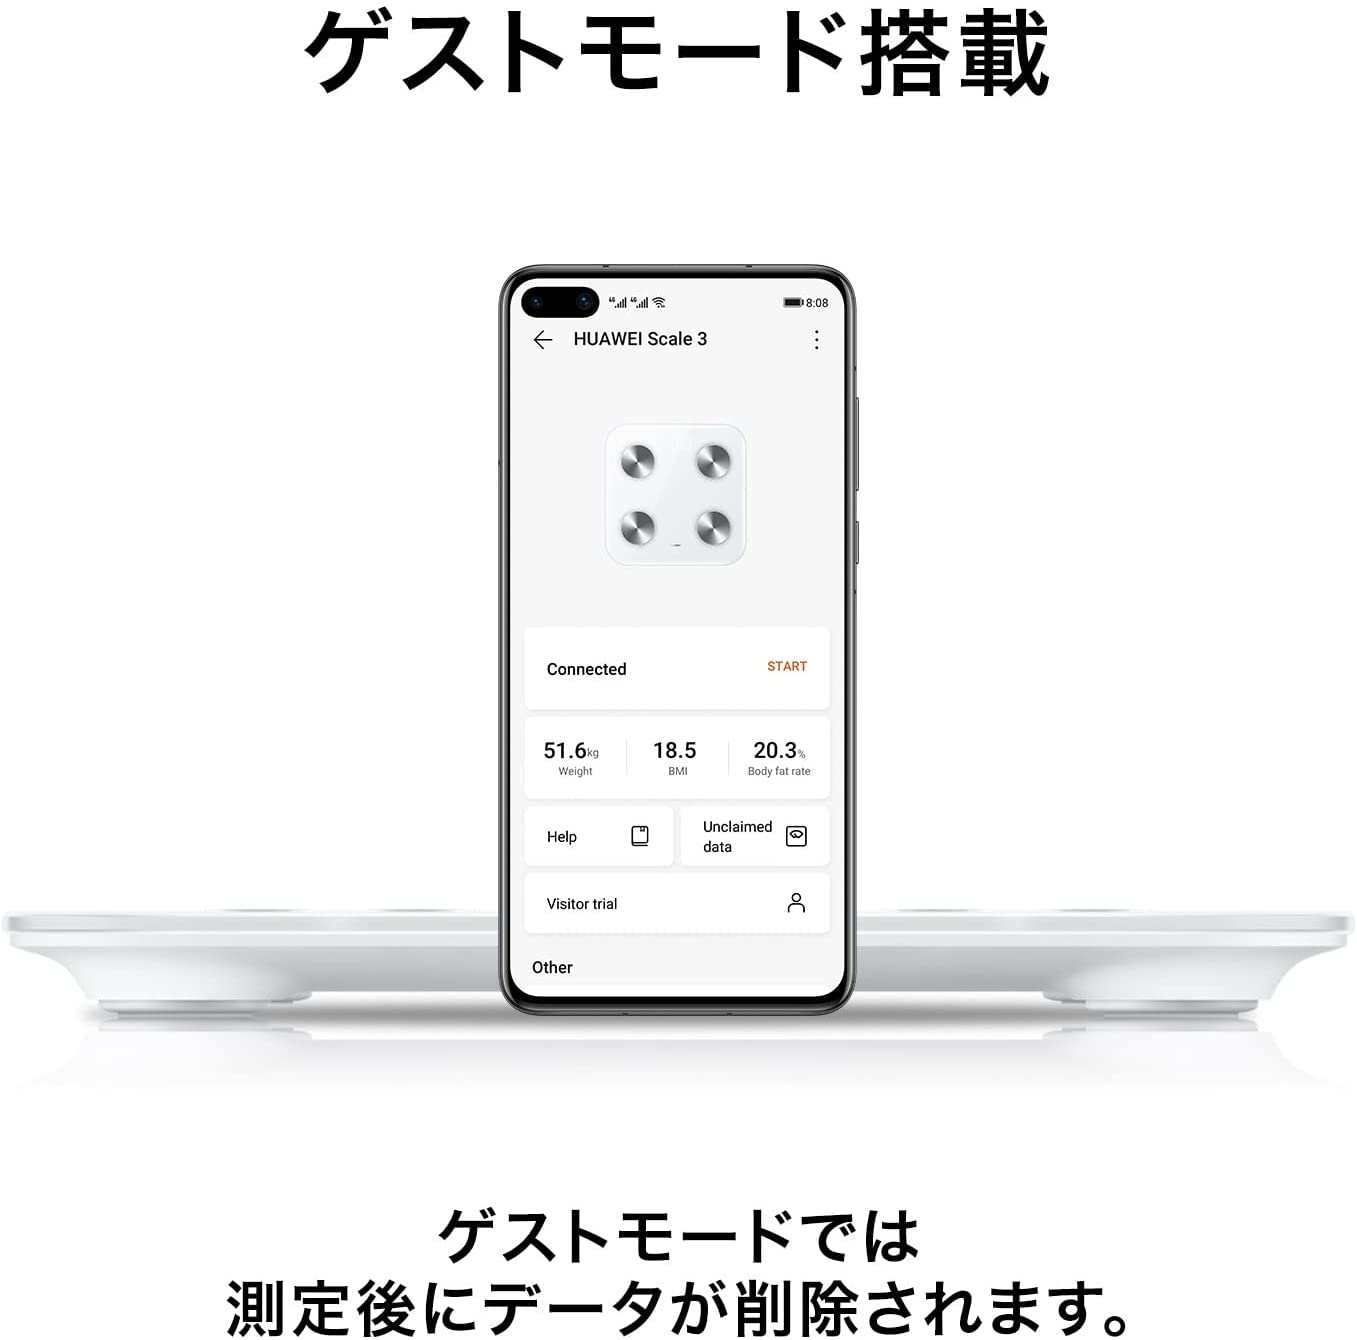 HUAWEI 体重計 Scale 3 Elegant White スマート体重計 | SoftBank公式 iPhone /スマートフォンアクセサリーオンラインショップ